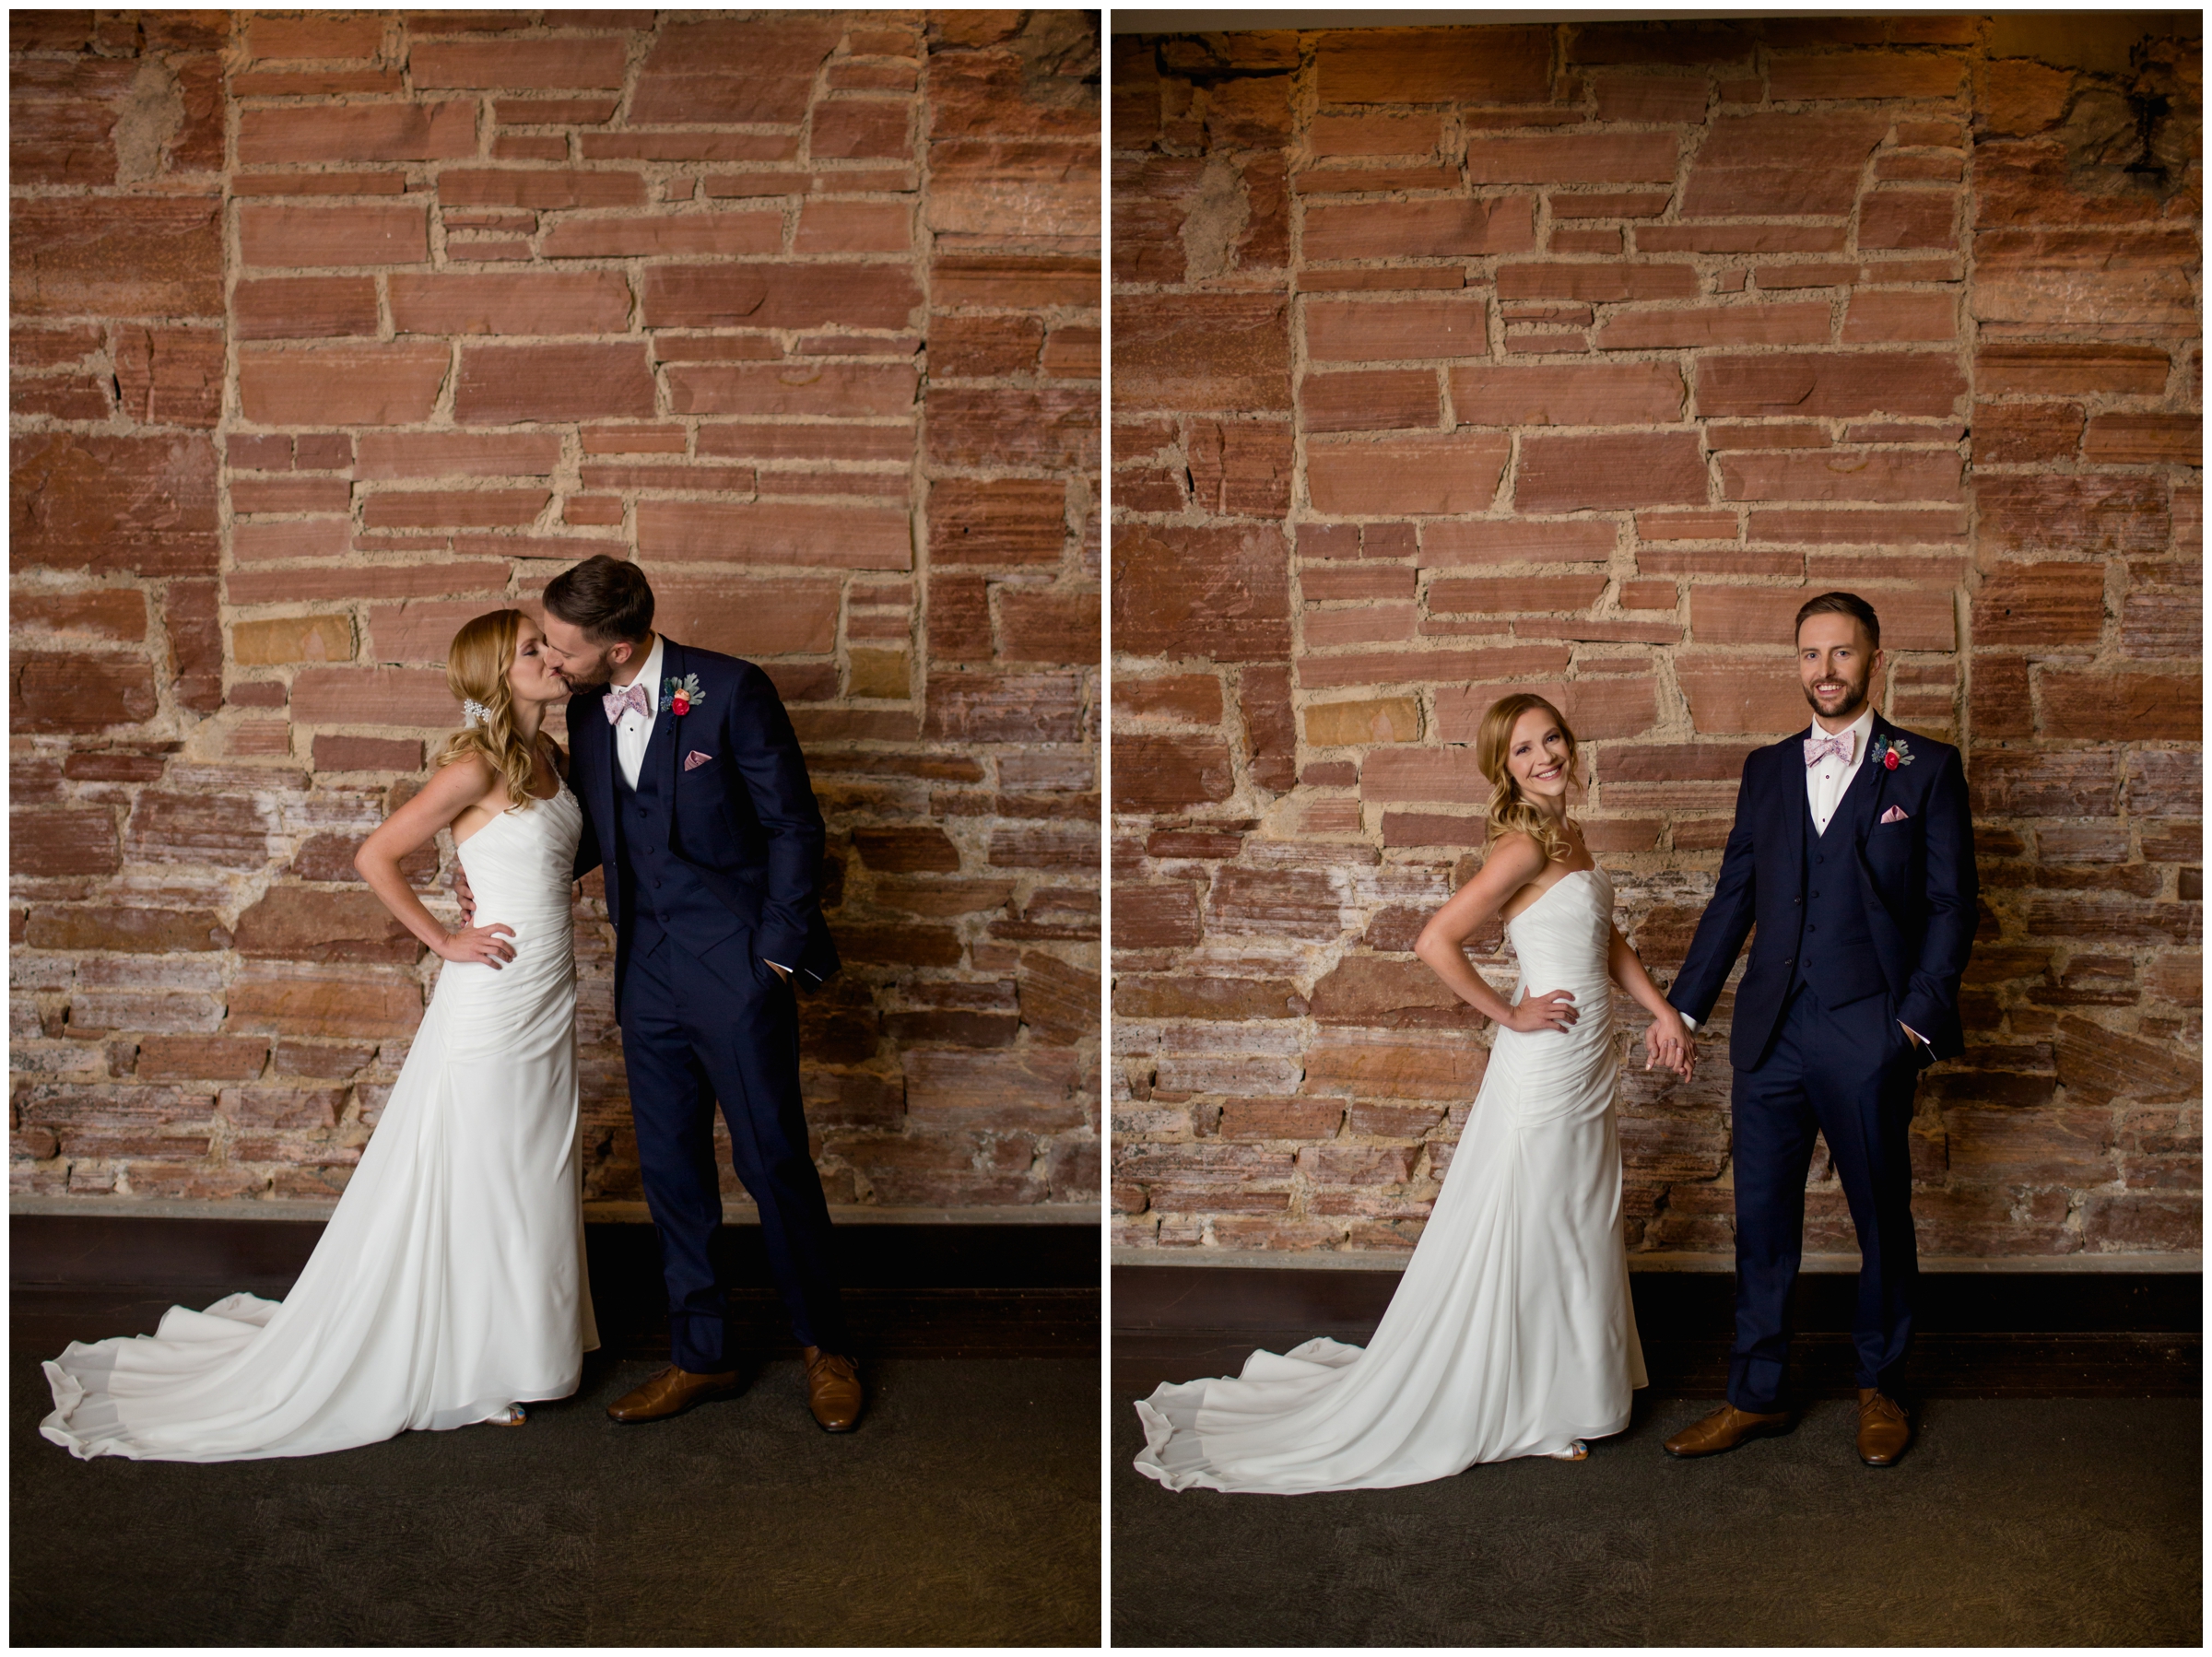 Denver Performing Arts wedding photos at Studio Loft Denver by Colorado photographer Plum Pretty Photography